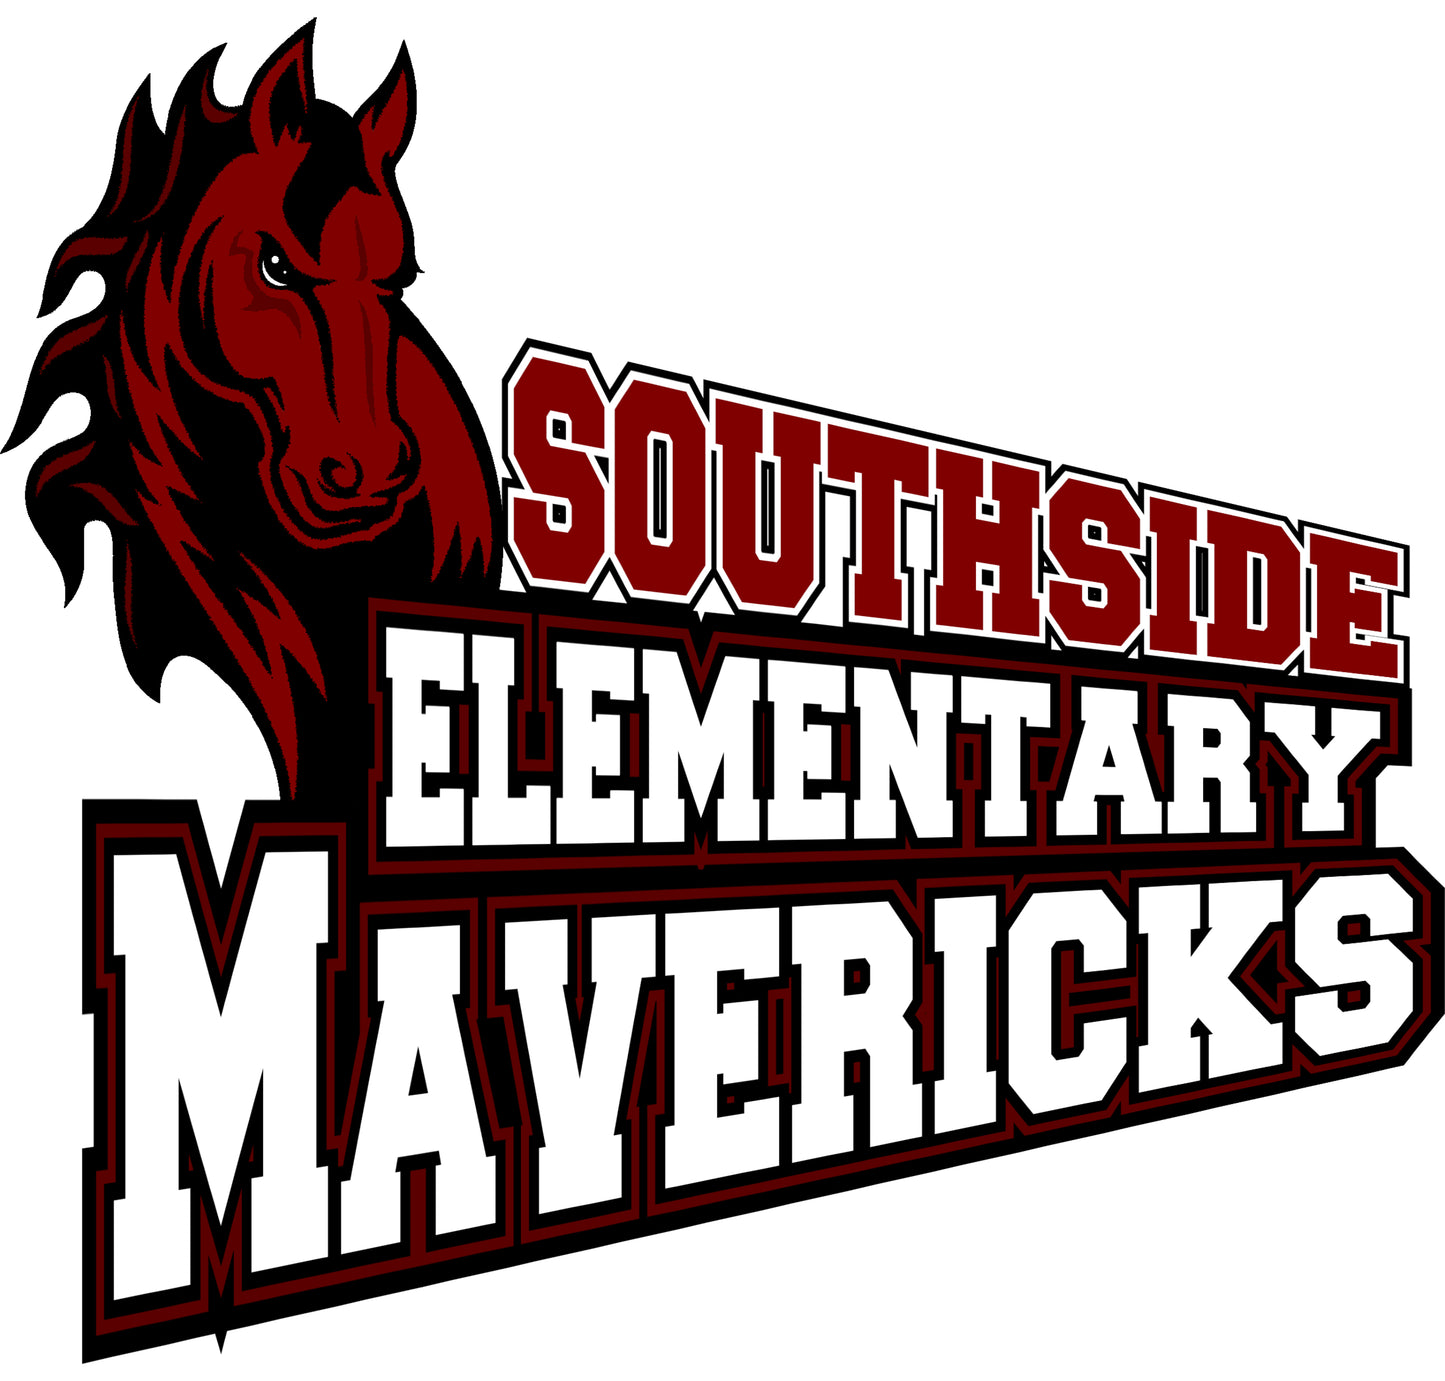 Southside Elementary Mavericks